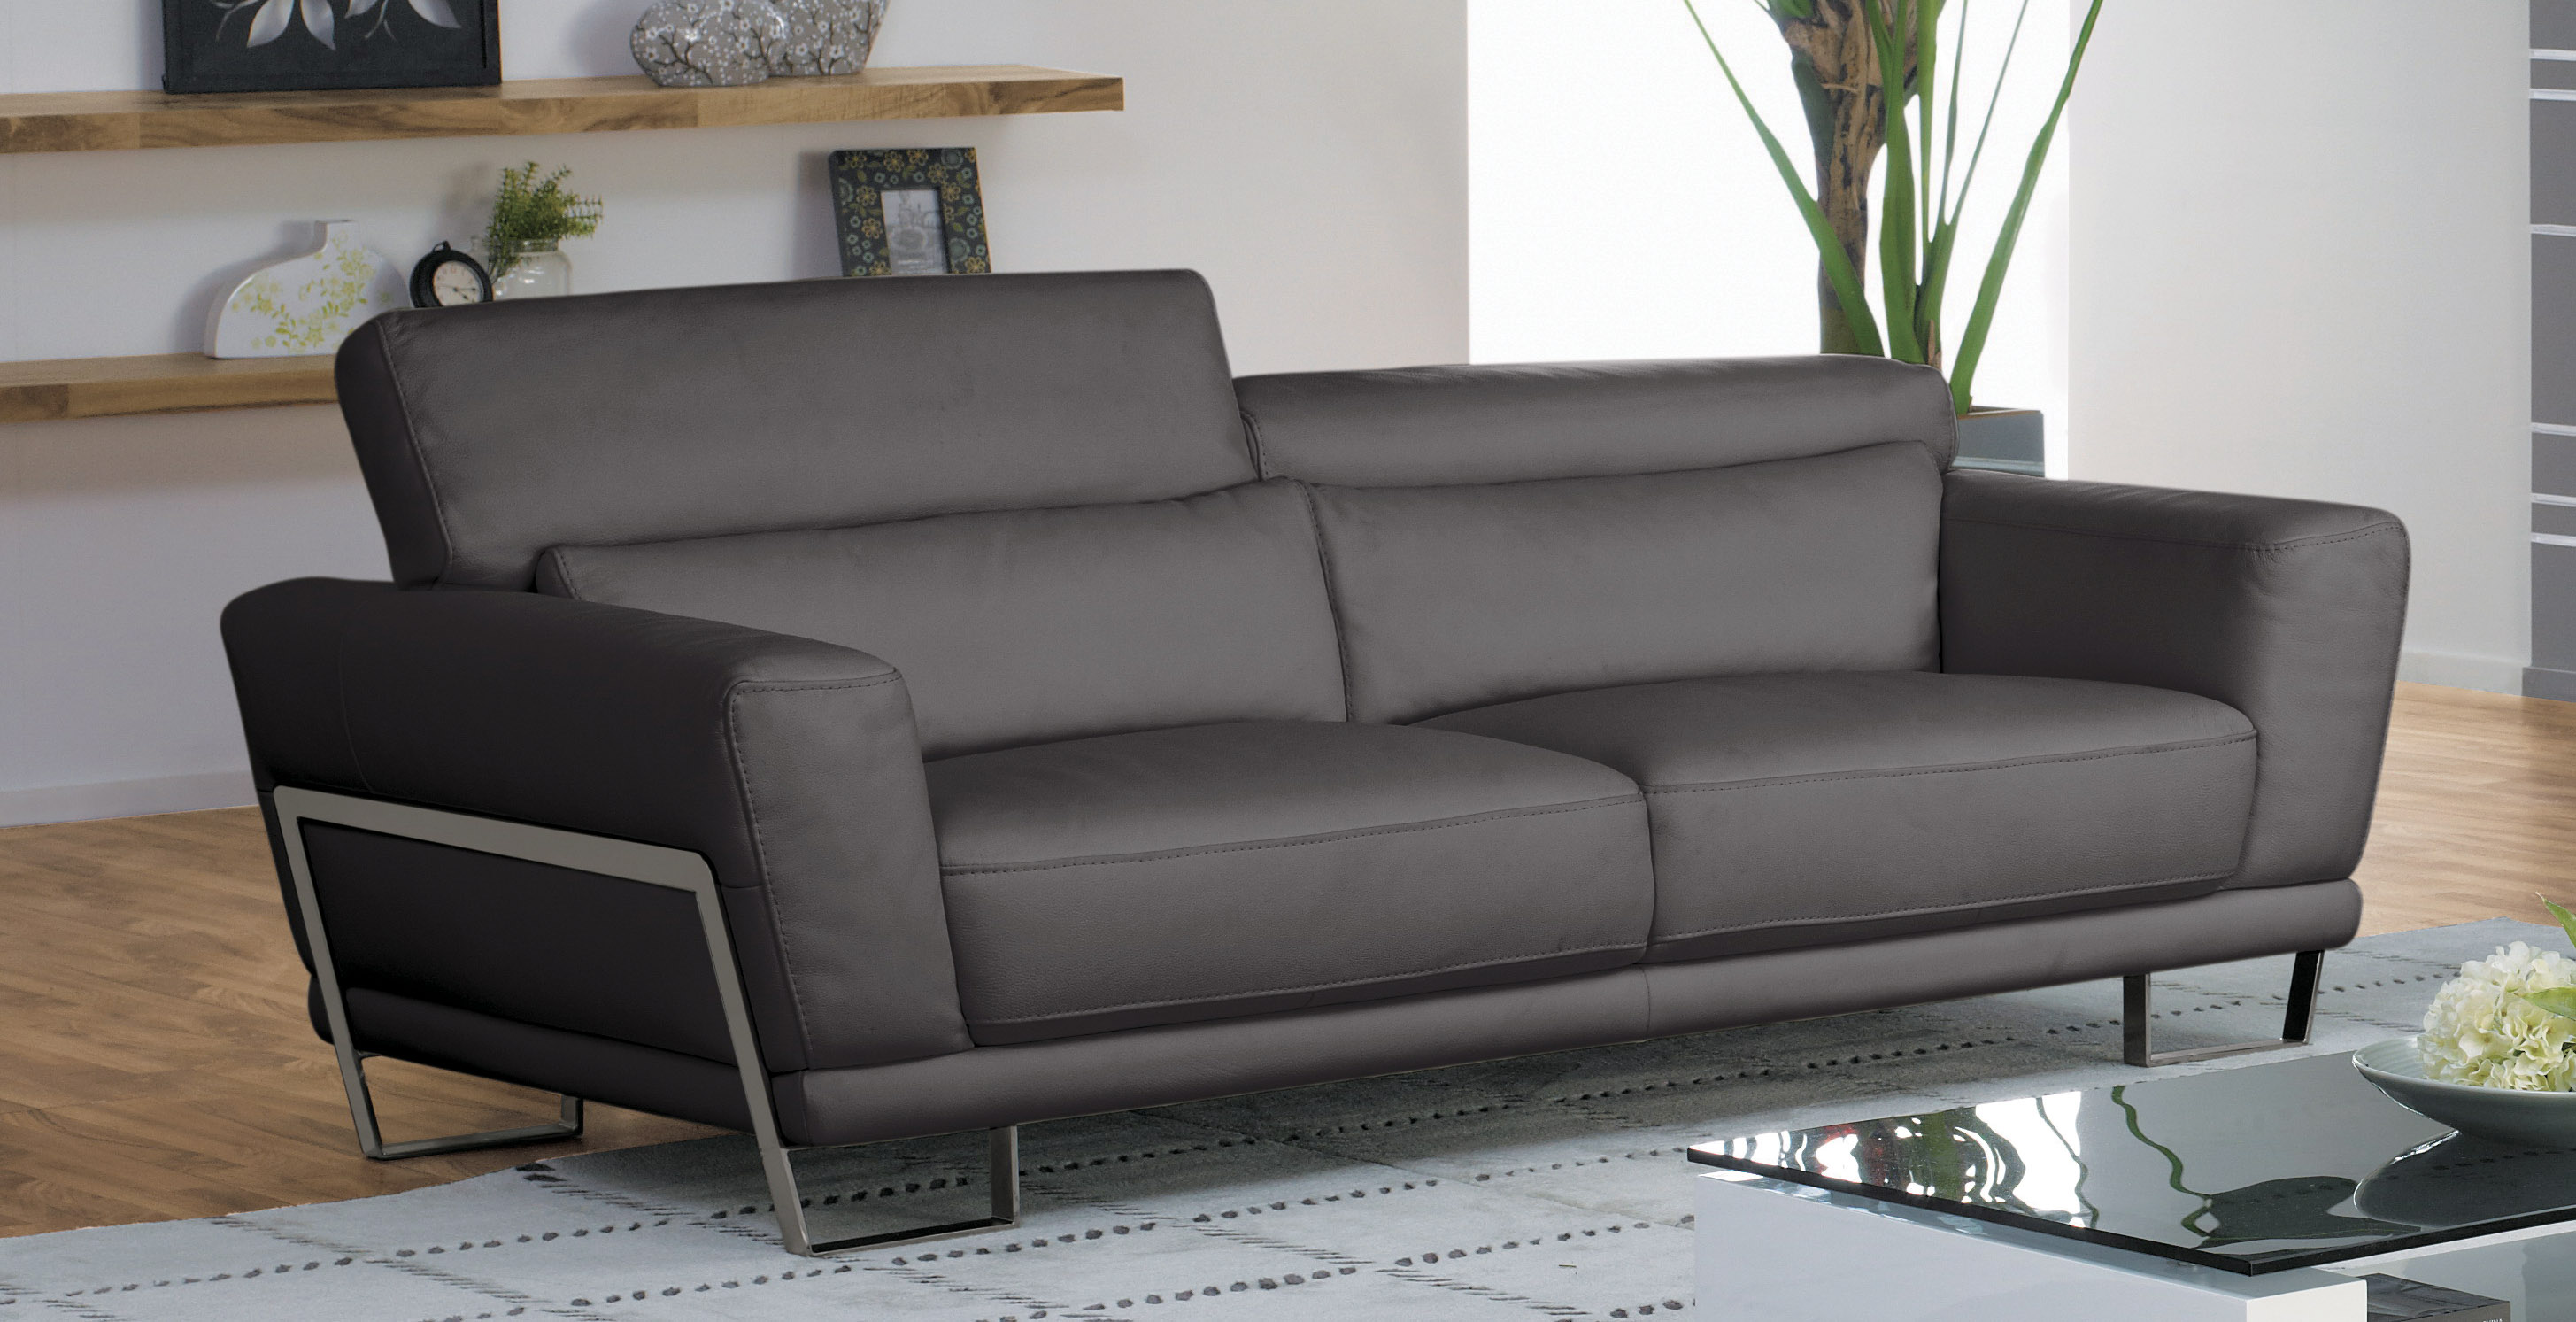 3 PC Classic Italian Leather Living Room Set - Click Image to Close